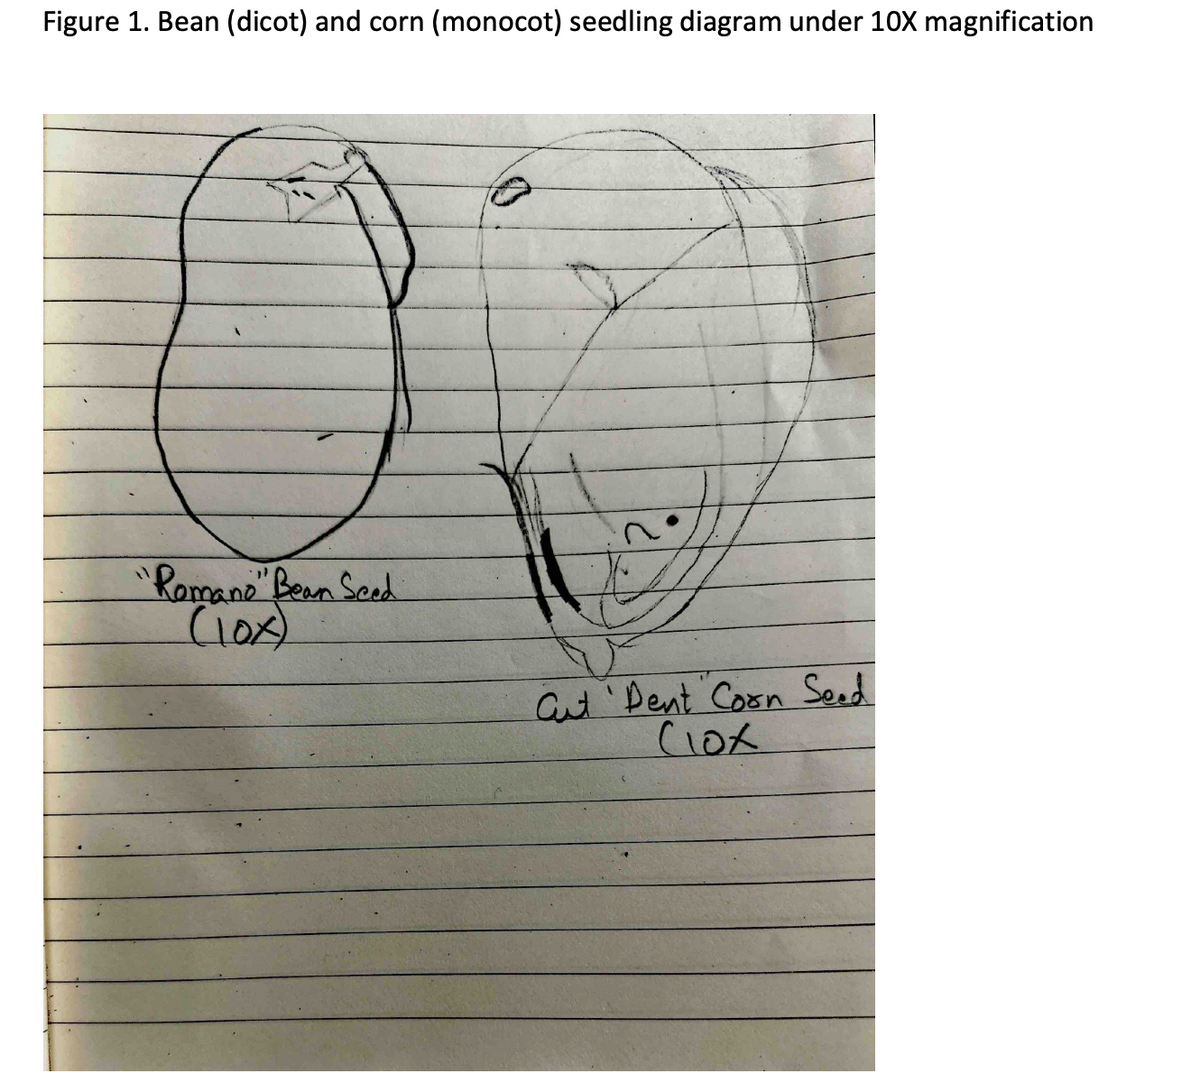 Figure 1. Bean (dicot) and corn (monocot) seedling diagram under 10X magnification
"Romane" Bean Seed
(10x)
Cut Dent Corn Seed
Clox